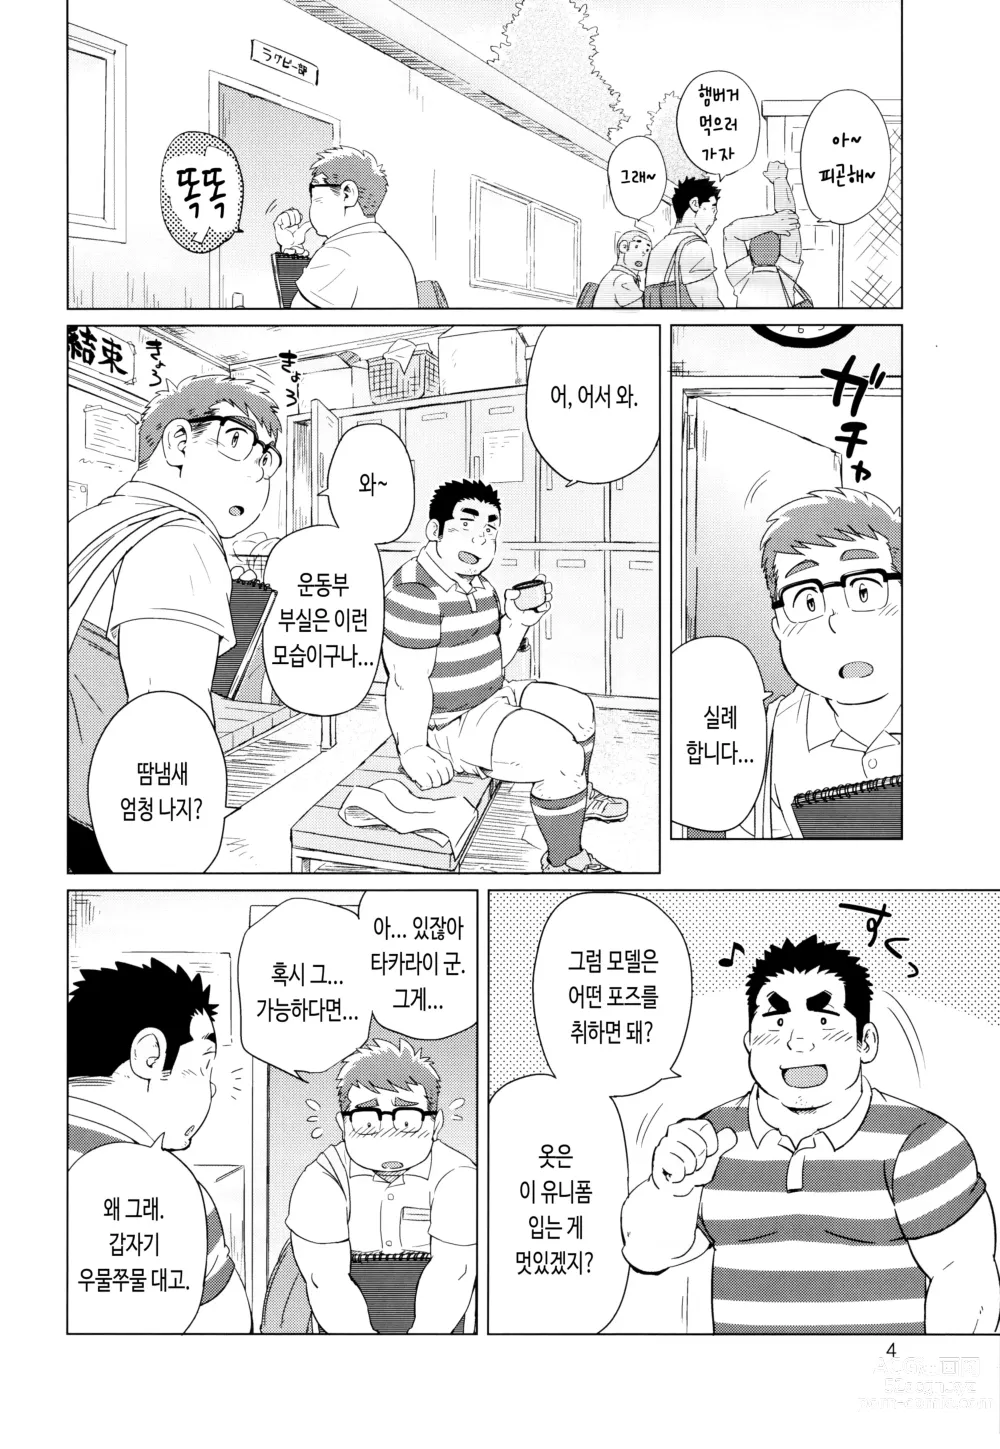 Page 6 of doujinshi 조건부로.